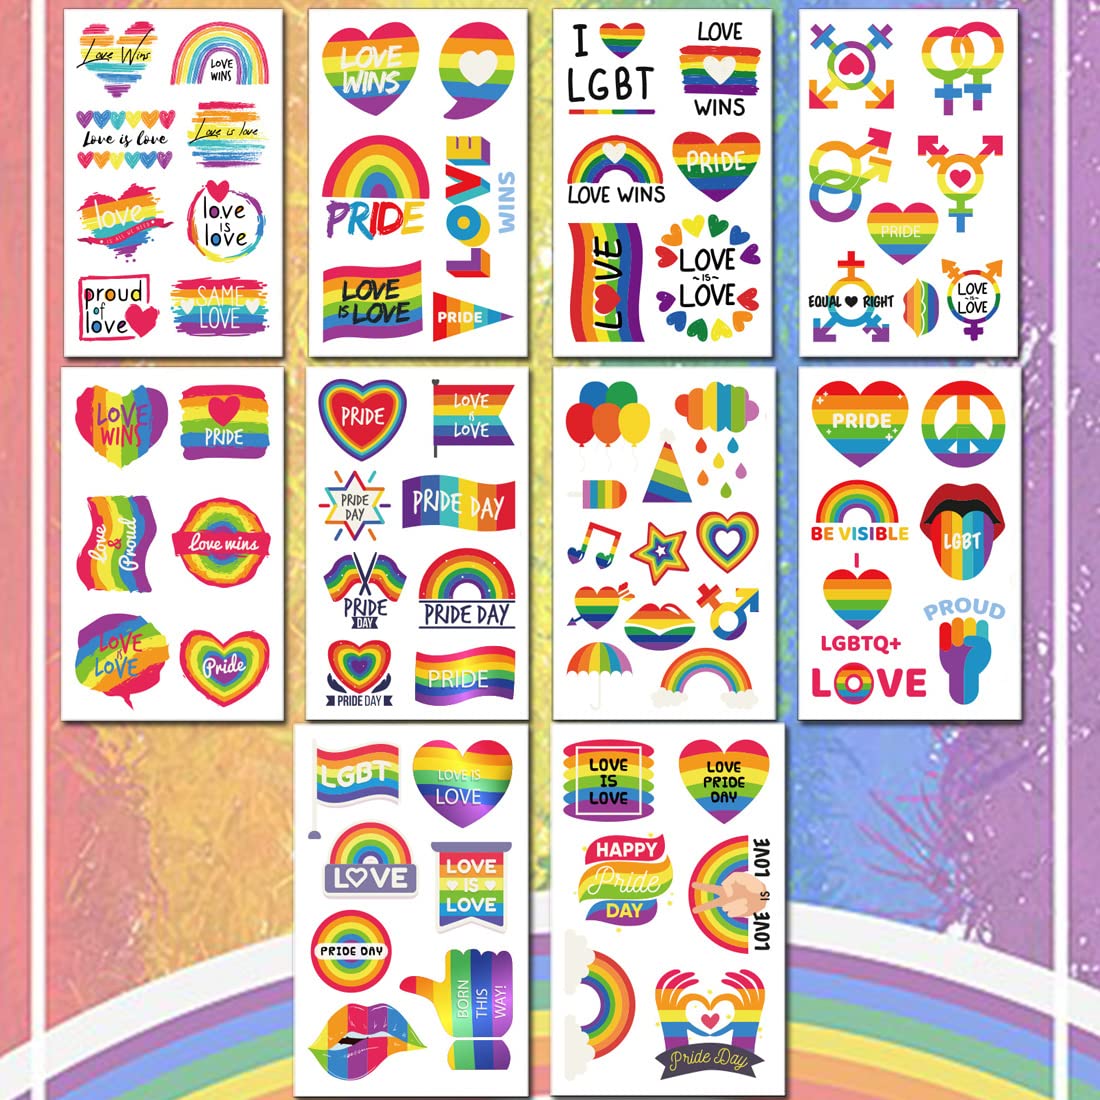 Ooopsiun 80 Pcs Rainbow Temporary Tattoos -10 Sheets Pride Tattoos Flower/Heart/Rainbow Tattoos for Pride Festivals